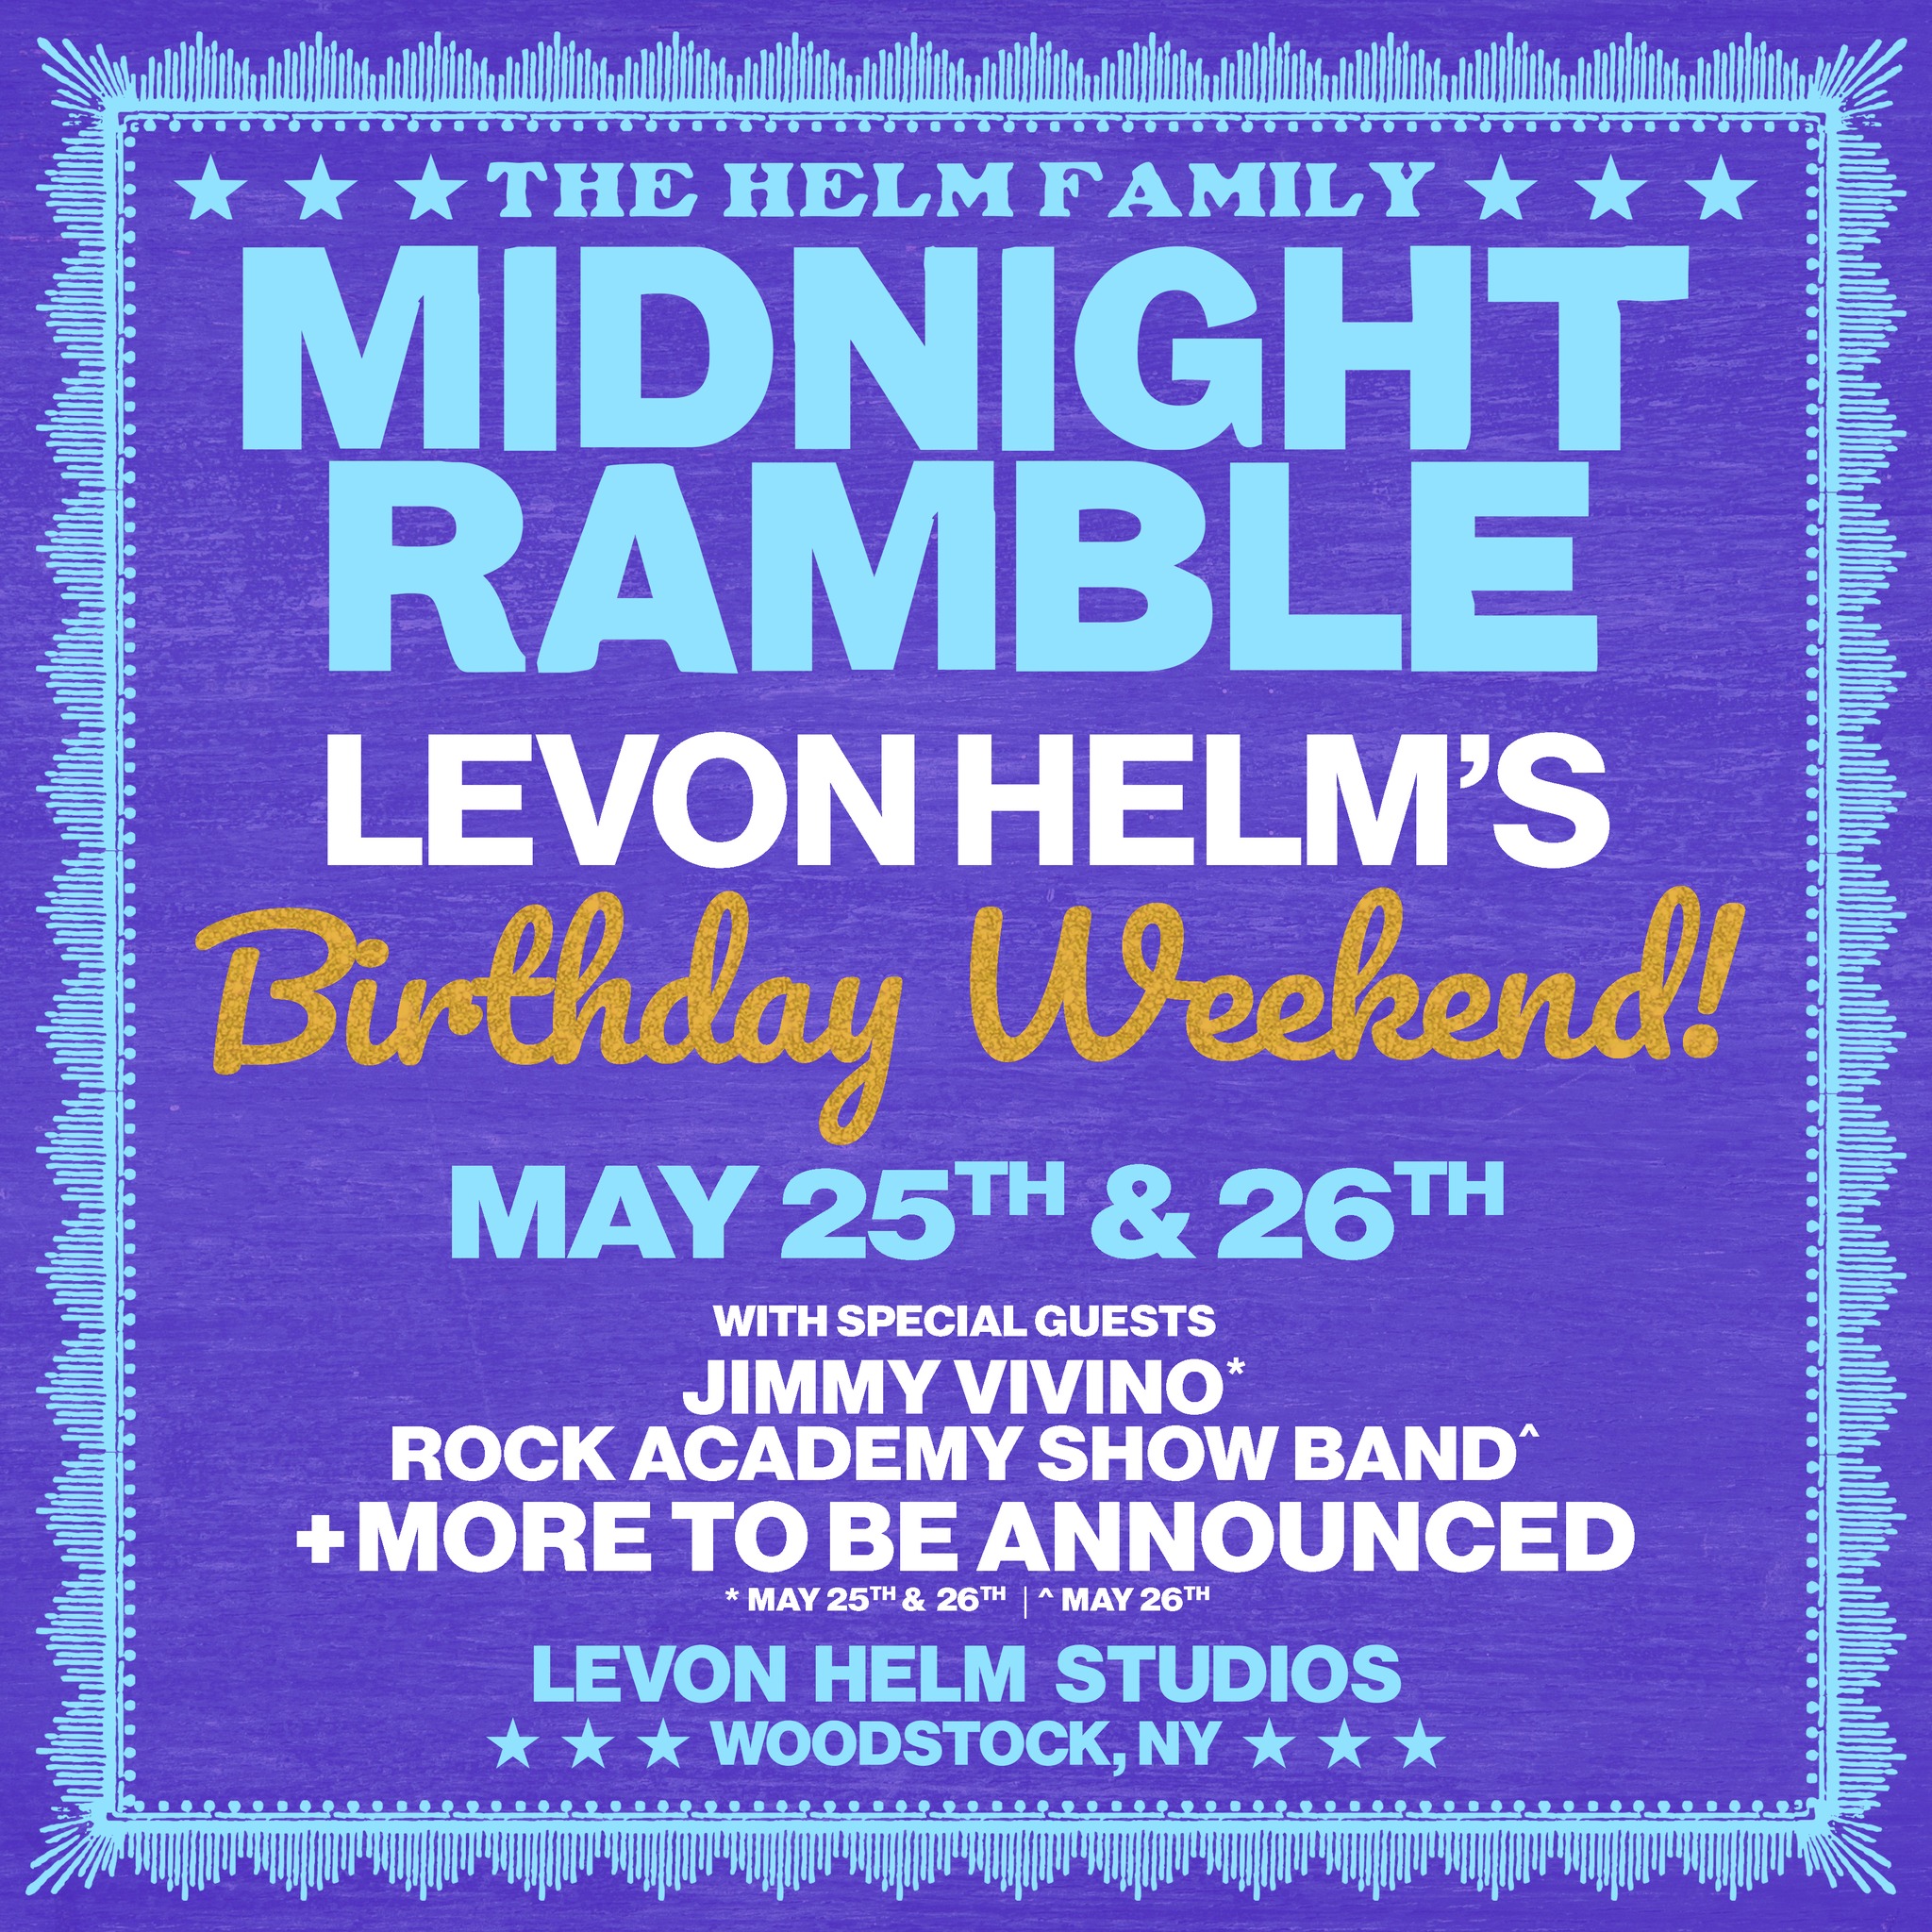 The Helm Family Midnight Ramble - Levon Helm's Birthday Weekend!